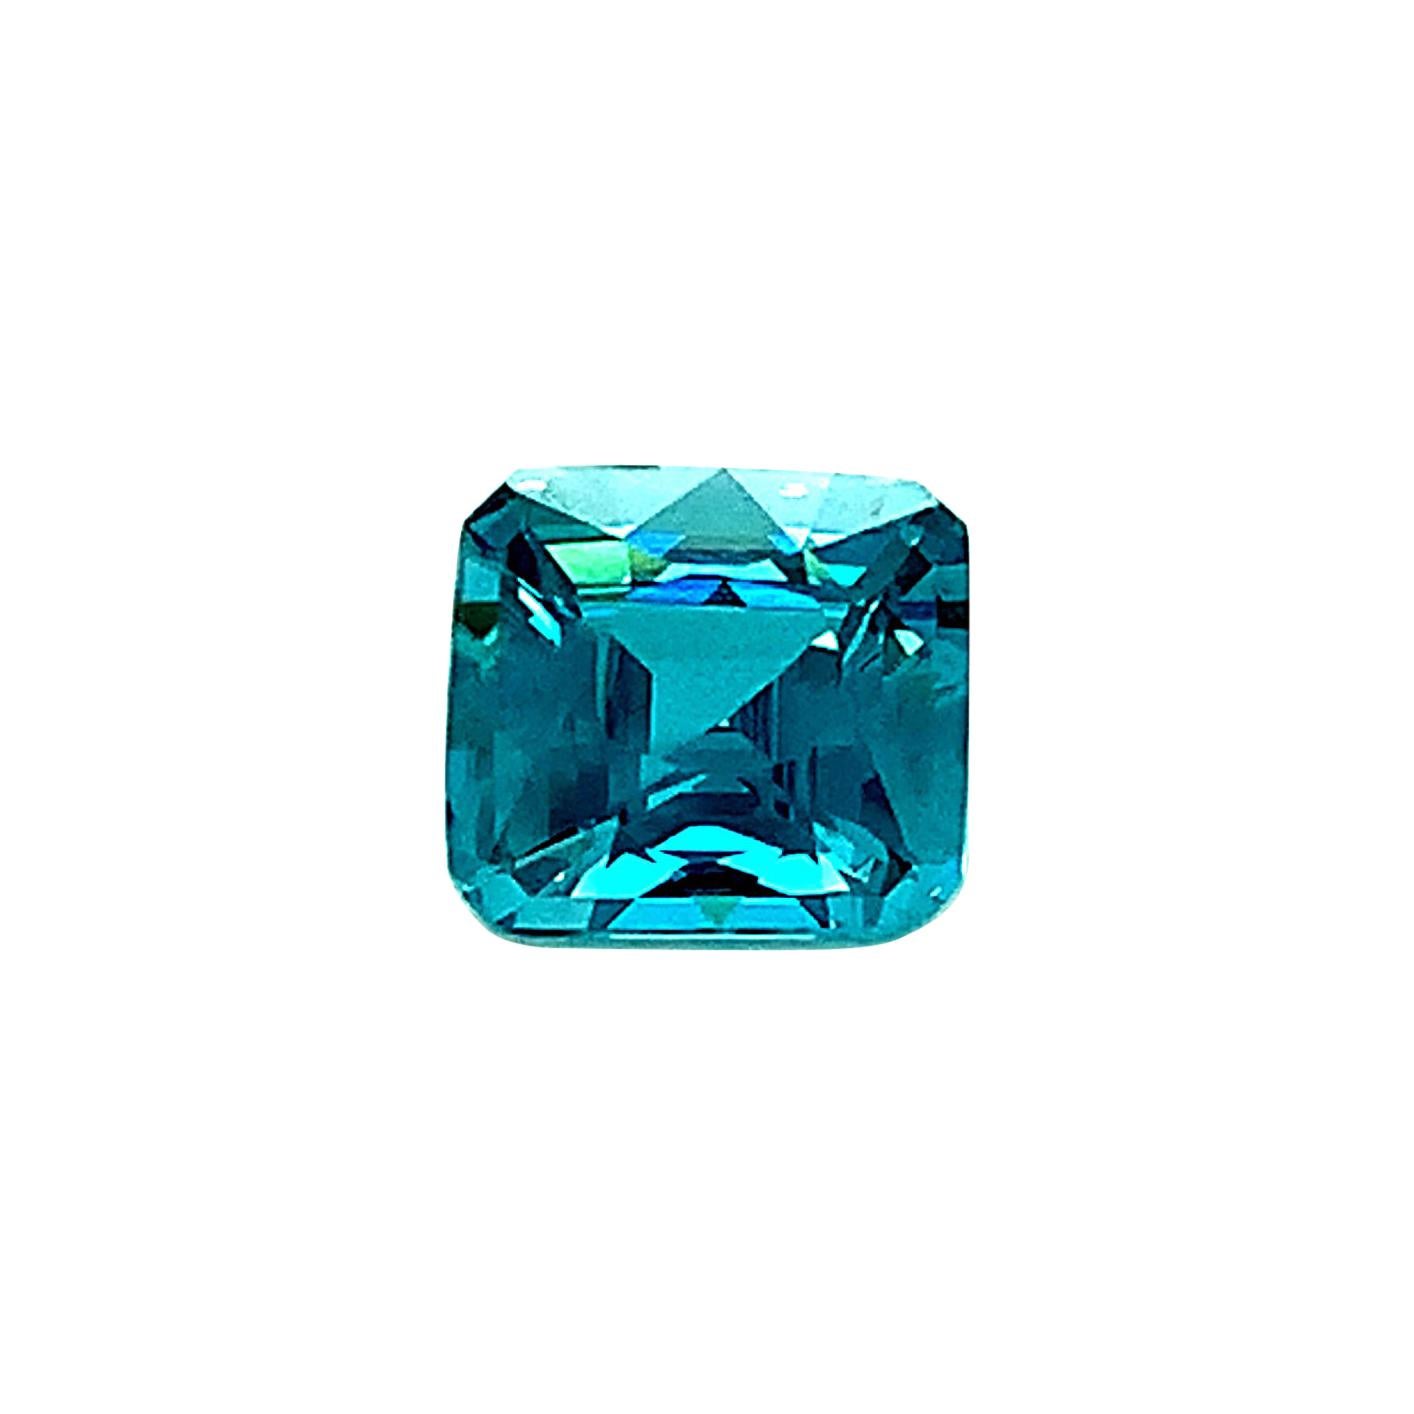 5.47 Carat Blue Zircon Square Octagon, Unset Loose Gemstone  For Sale